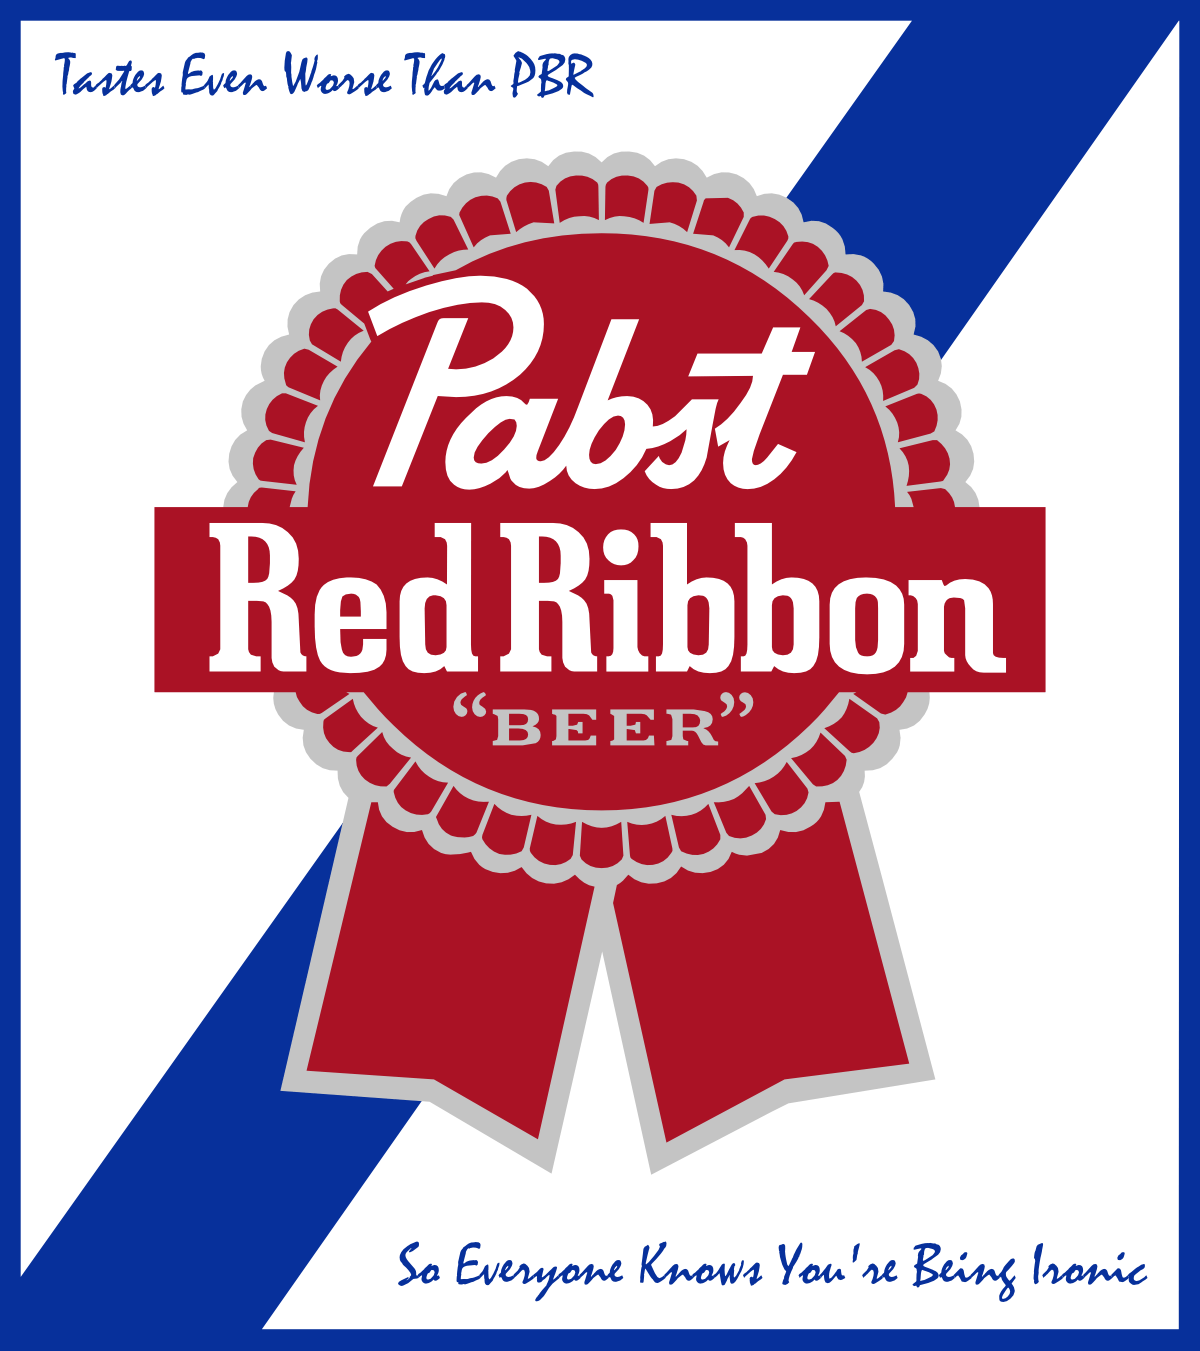 Blue and Red Ribbon Logo - Red and blue ribbon Logos